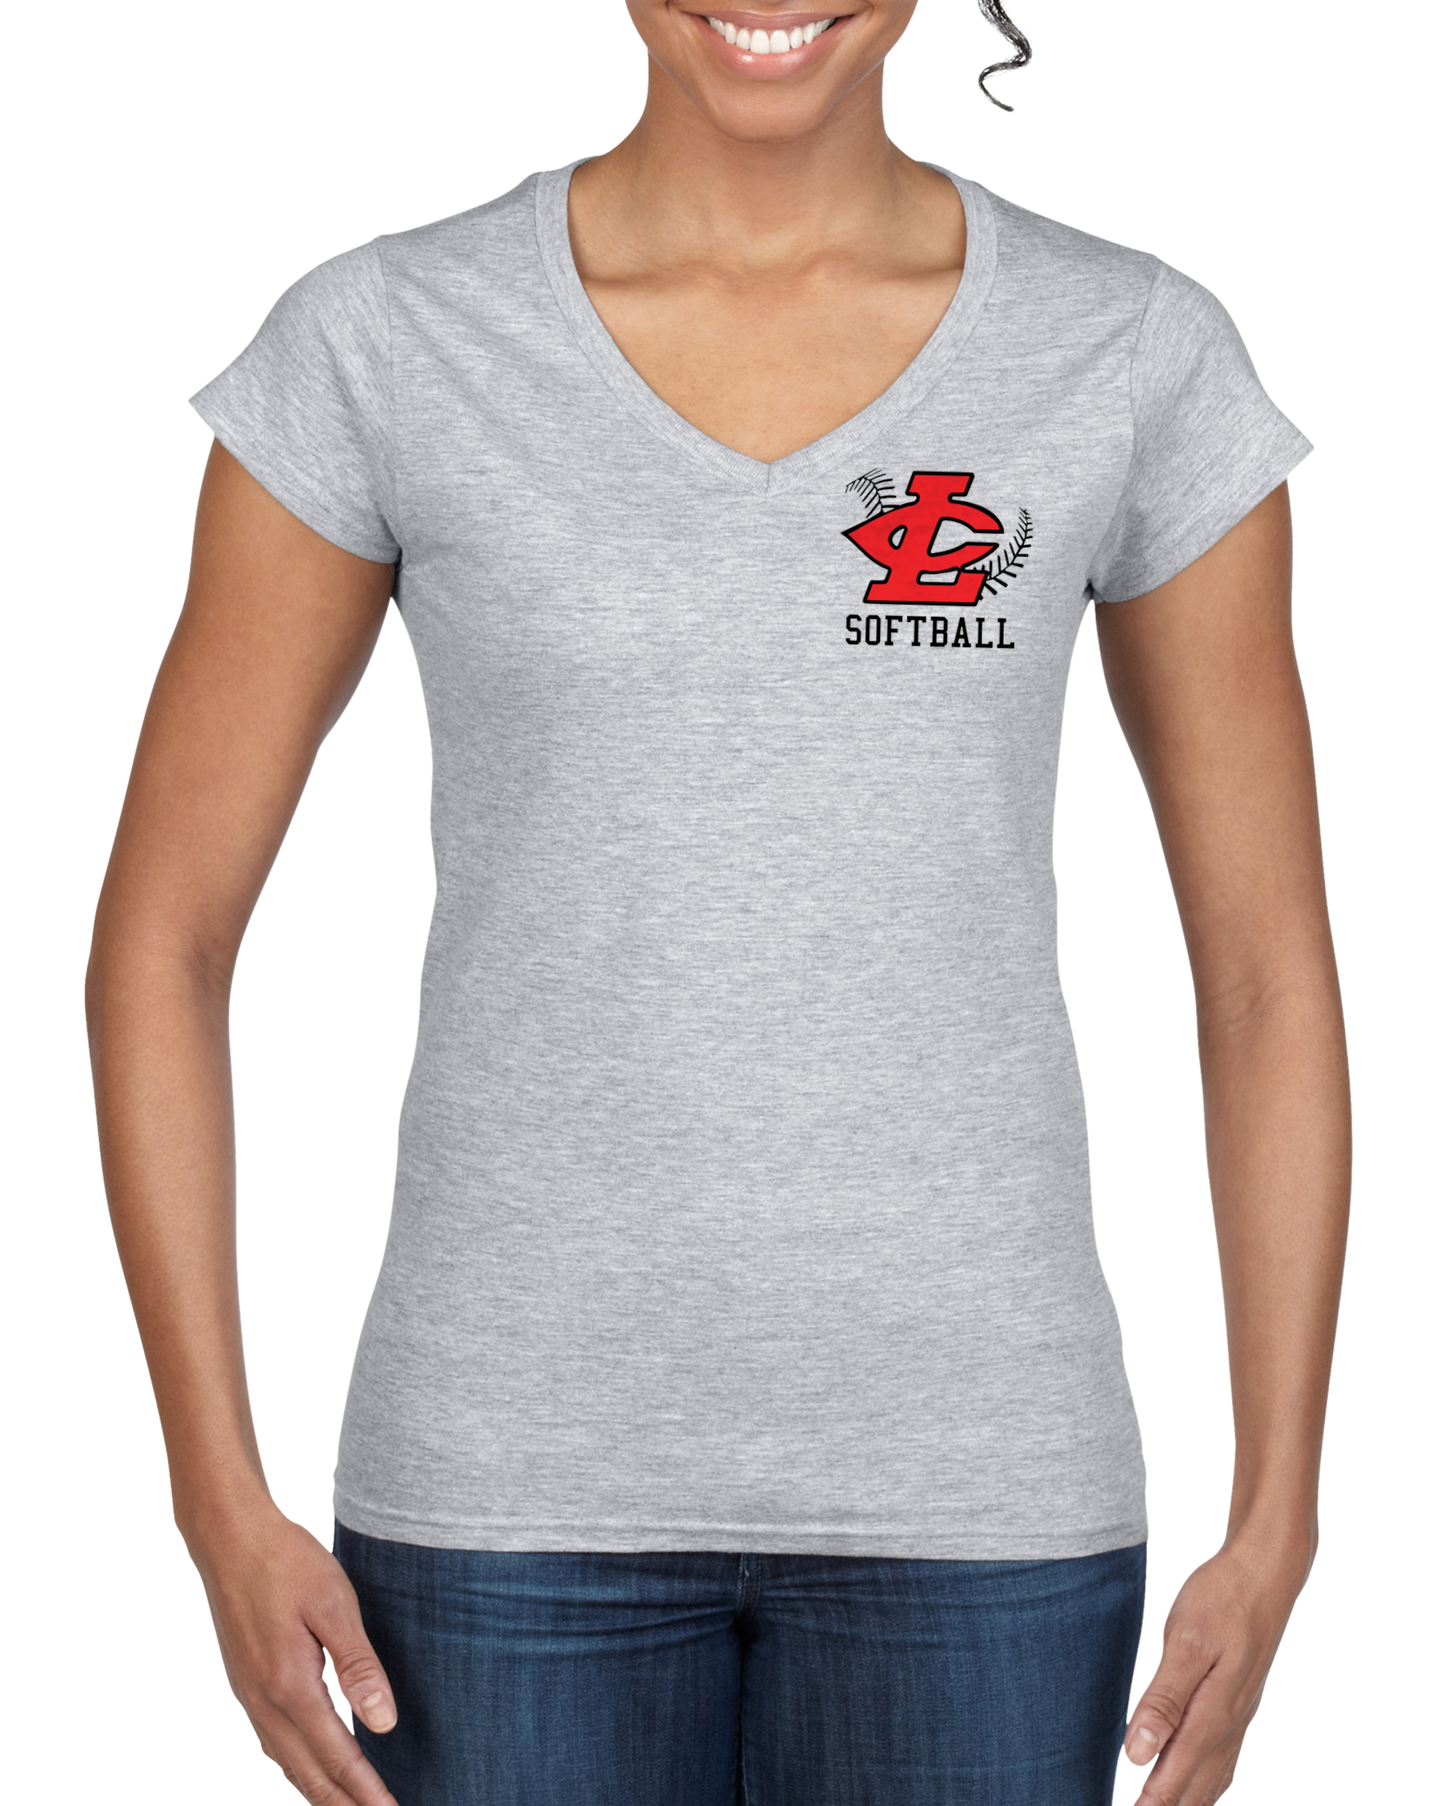 CLLL Softball SoftStyle Gildan Fitted V-Neck T-Shirt GRAY